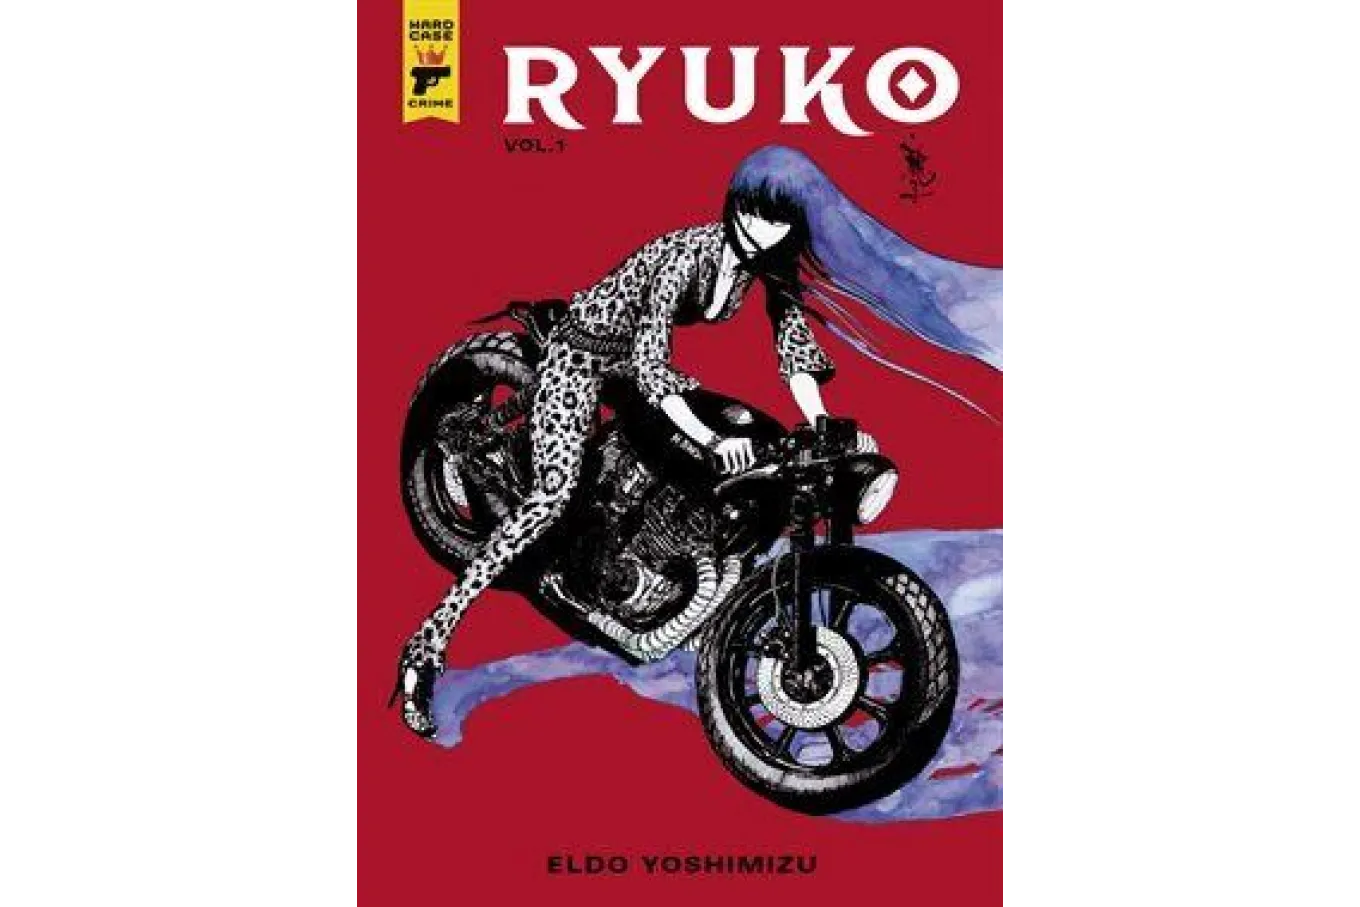 Ryuko book cover